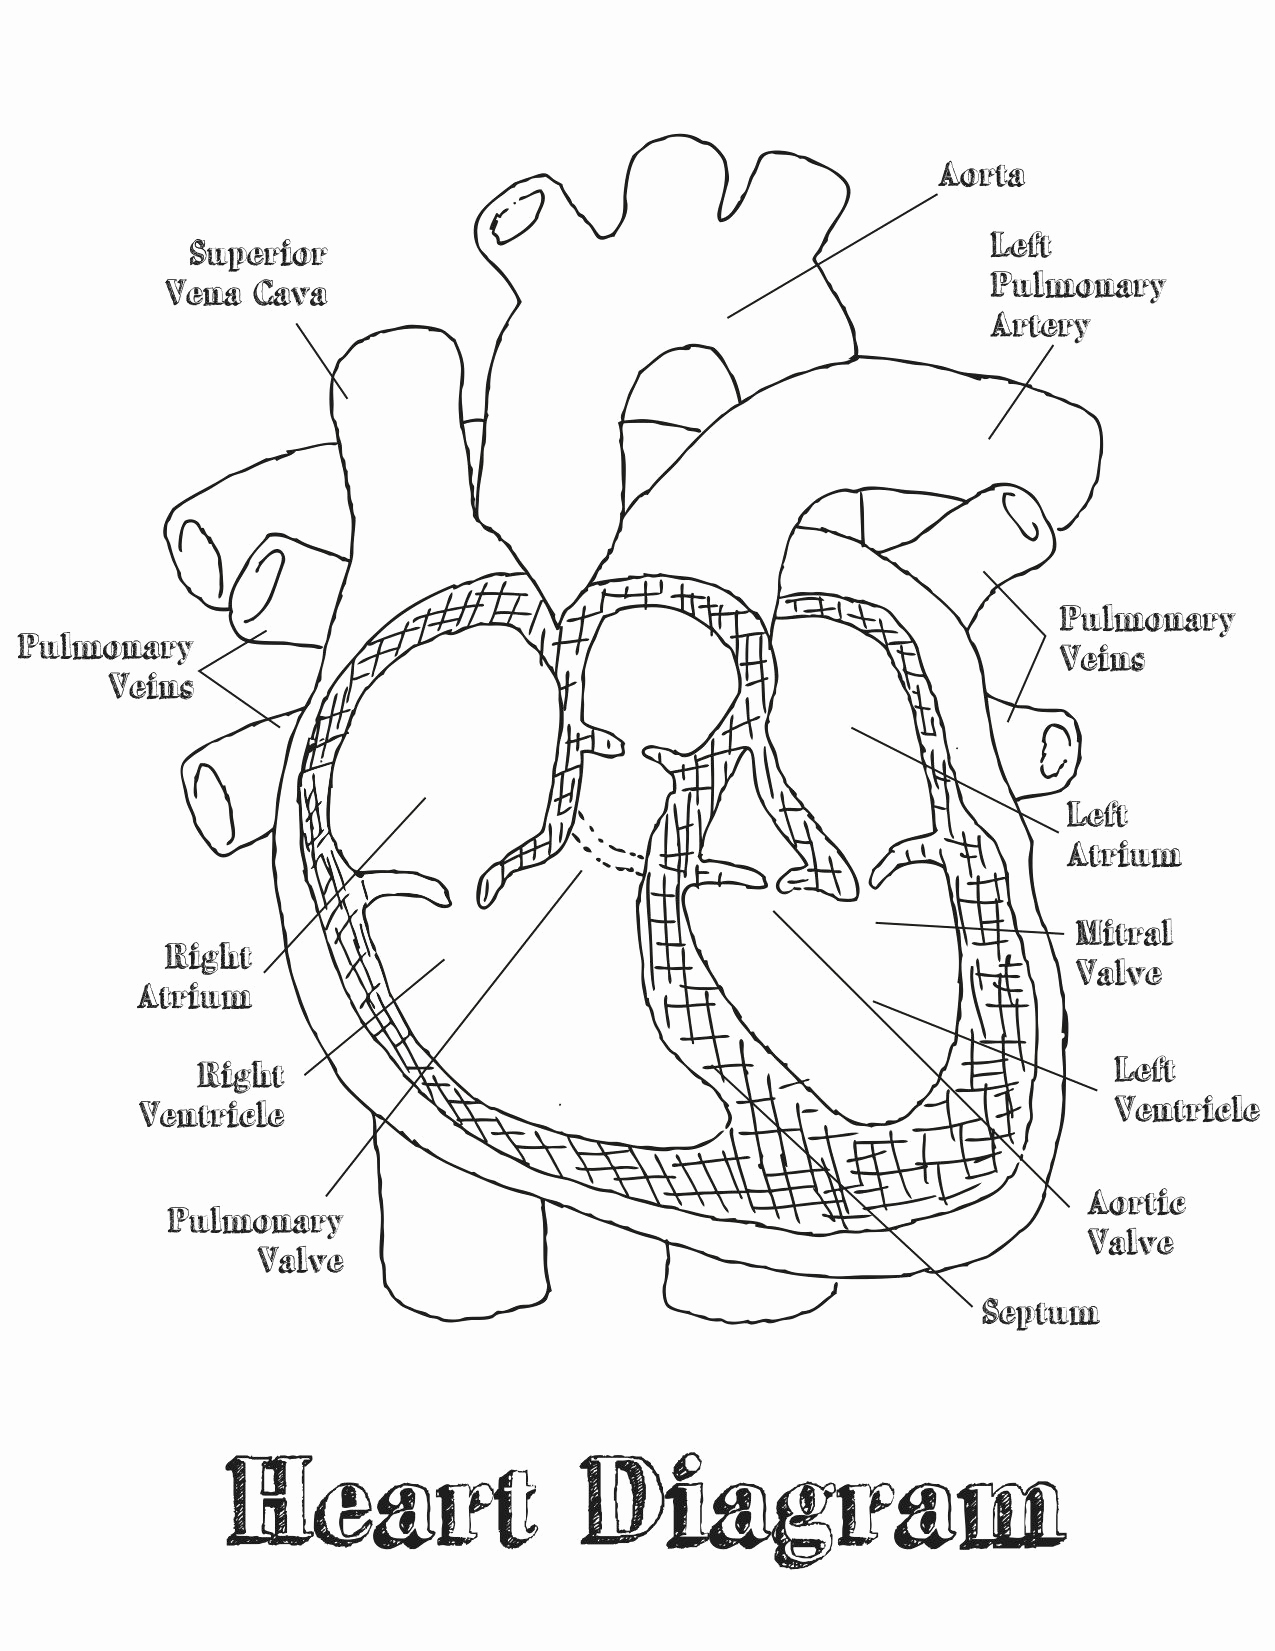 Heart Diagram Worksheet Blank Unique Heart Diagram Labeled Worksheet Google Search